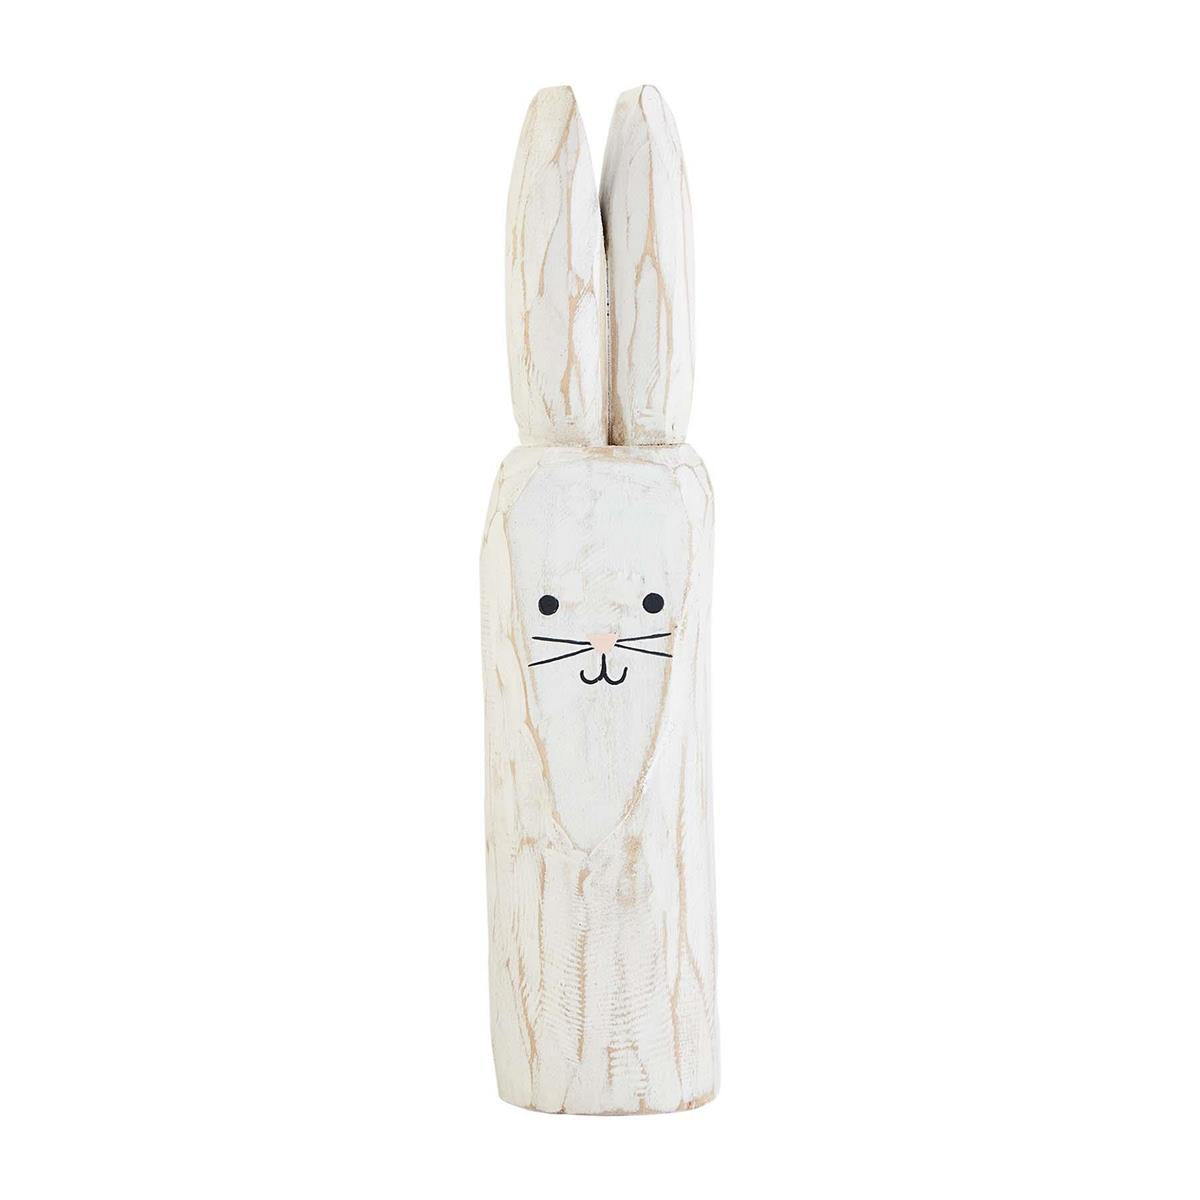 Figurine - Small Bunny Block